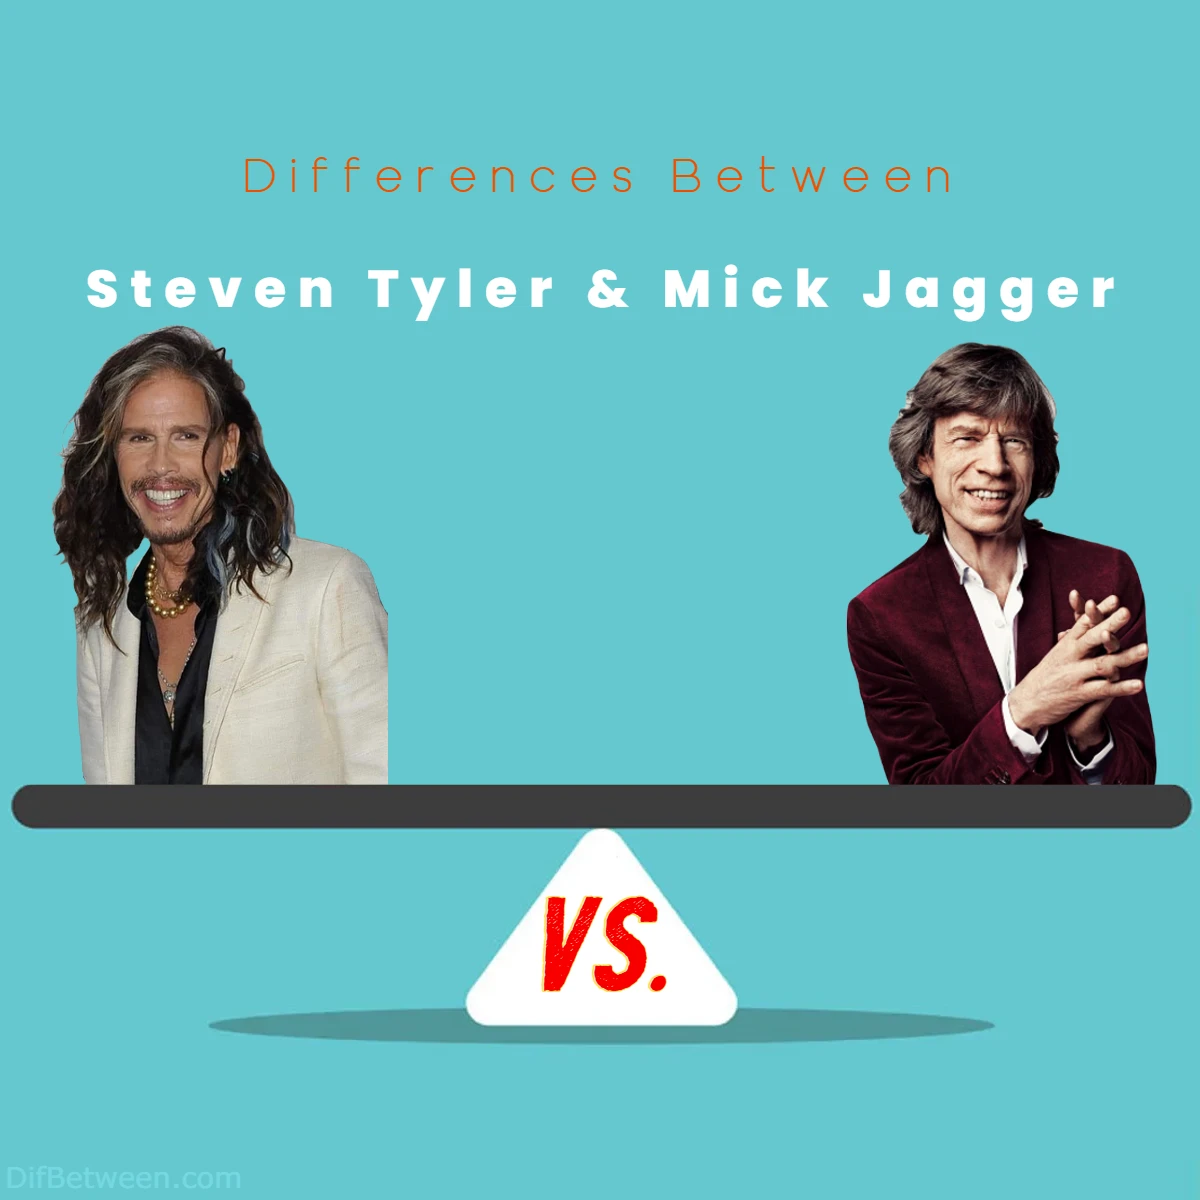 Differences Between Steven Tyler vs Mick Jagger